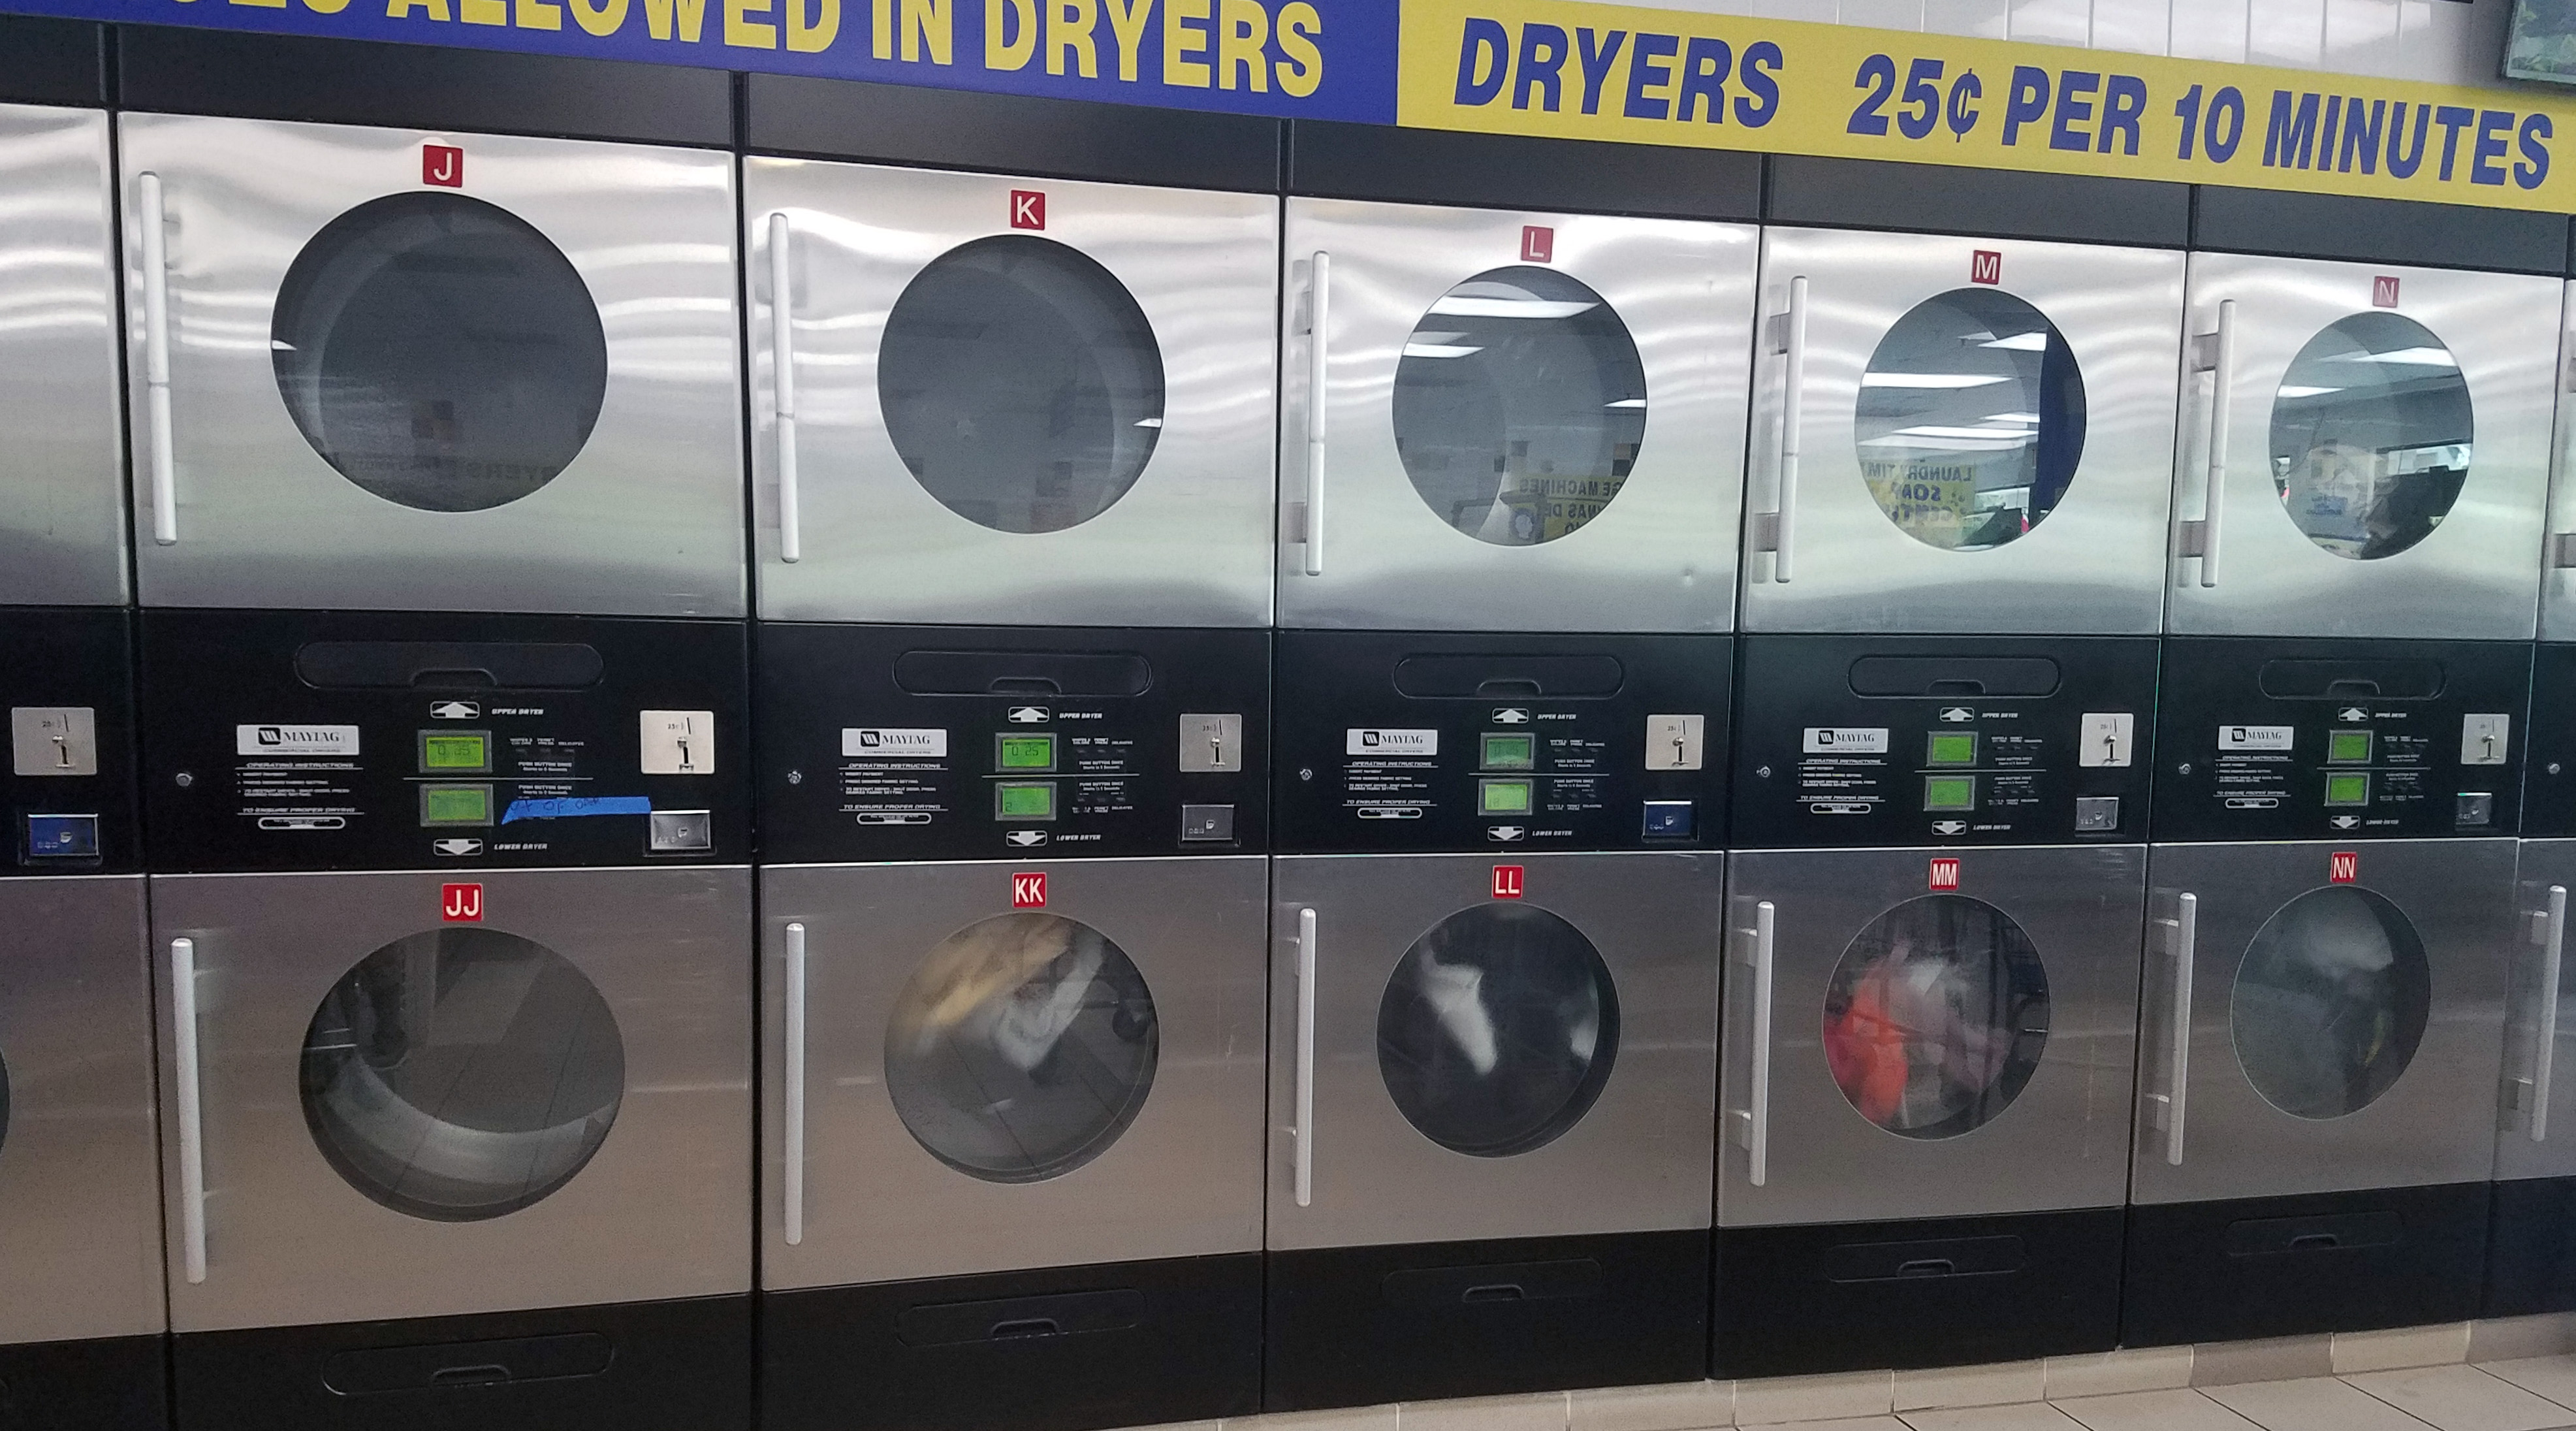 greenacres laundromat jumbo dryers